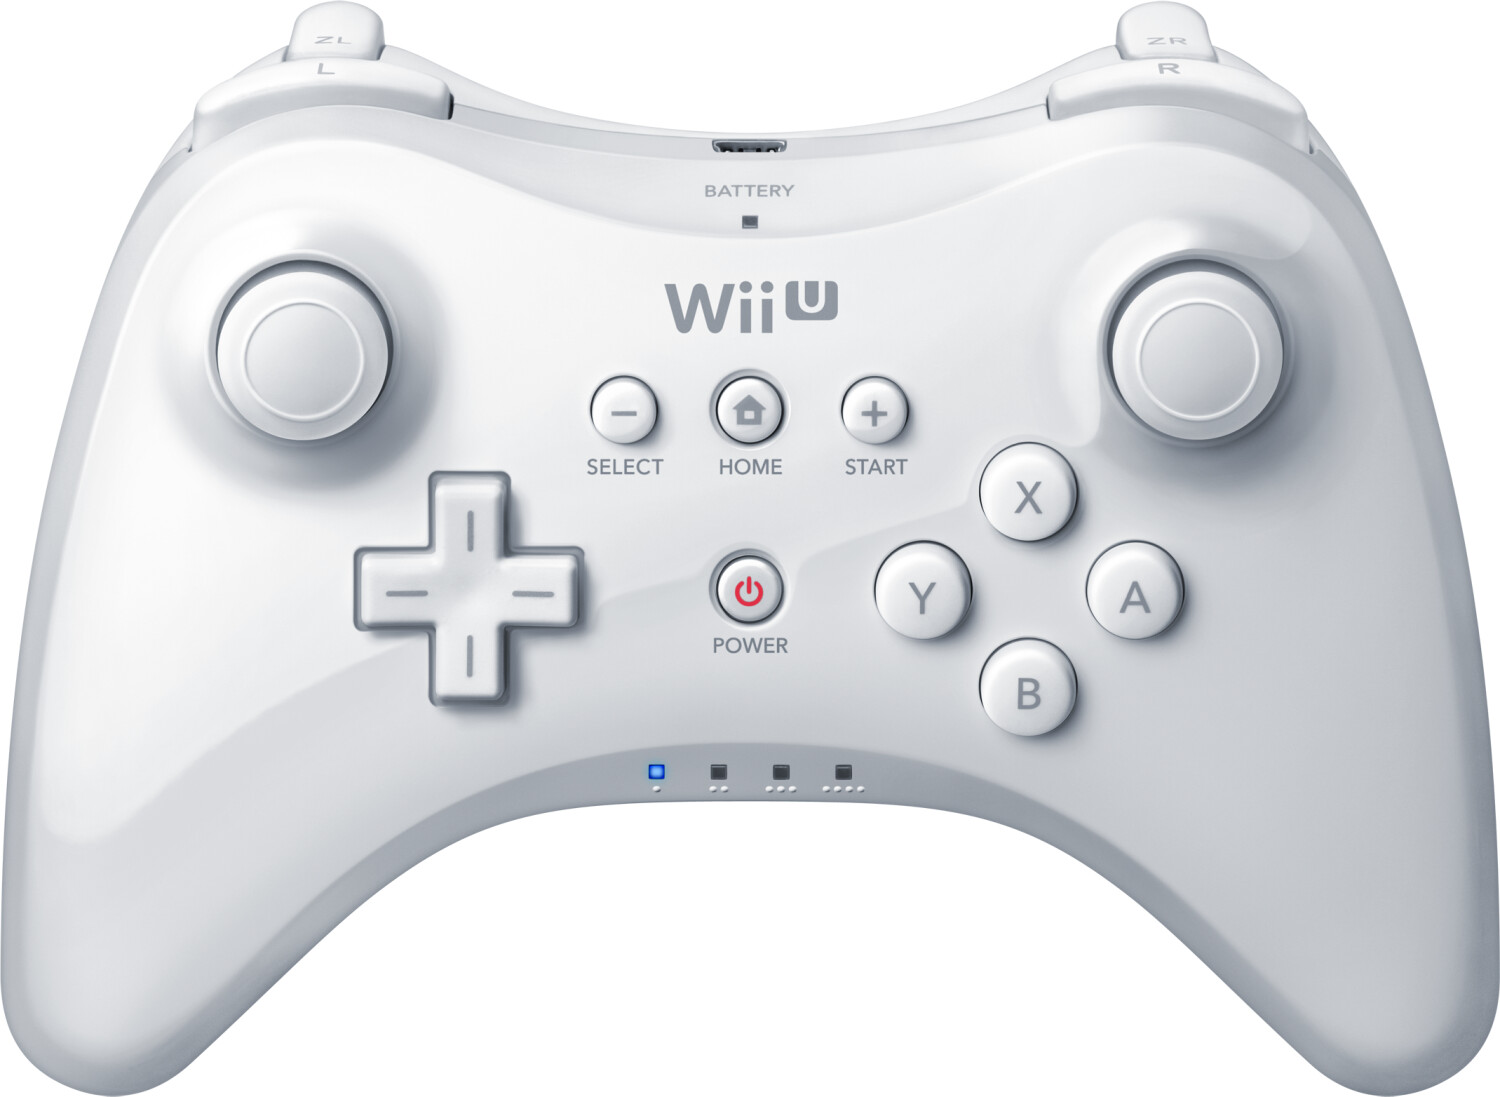 Console Wii U NINTENDO Basic Just Dance 2014 - Edition Limitée Pas Cher 